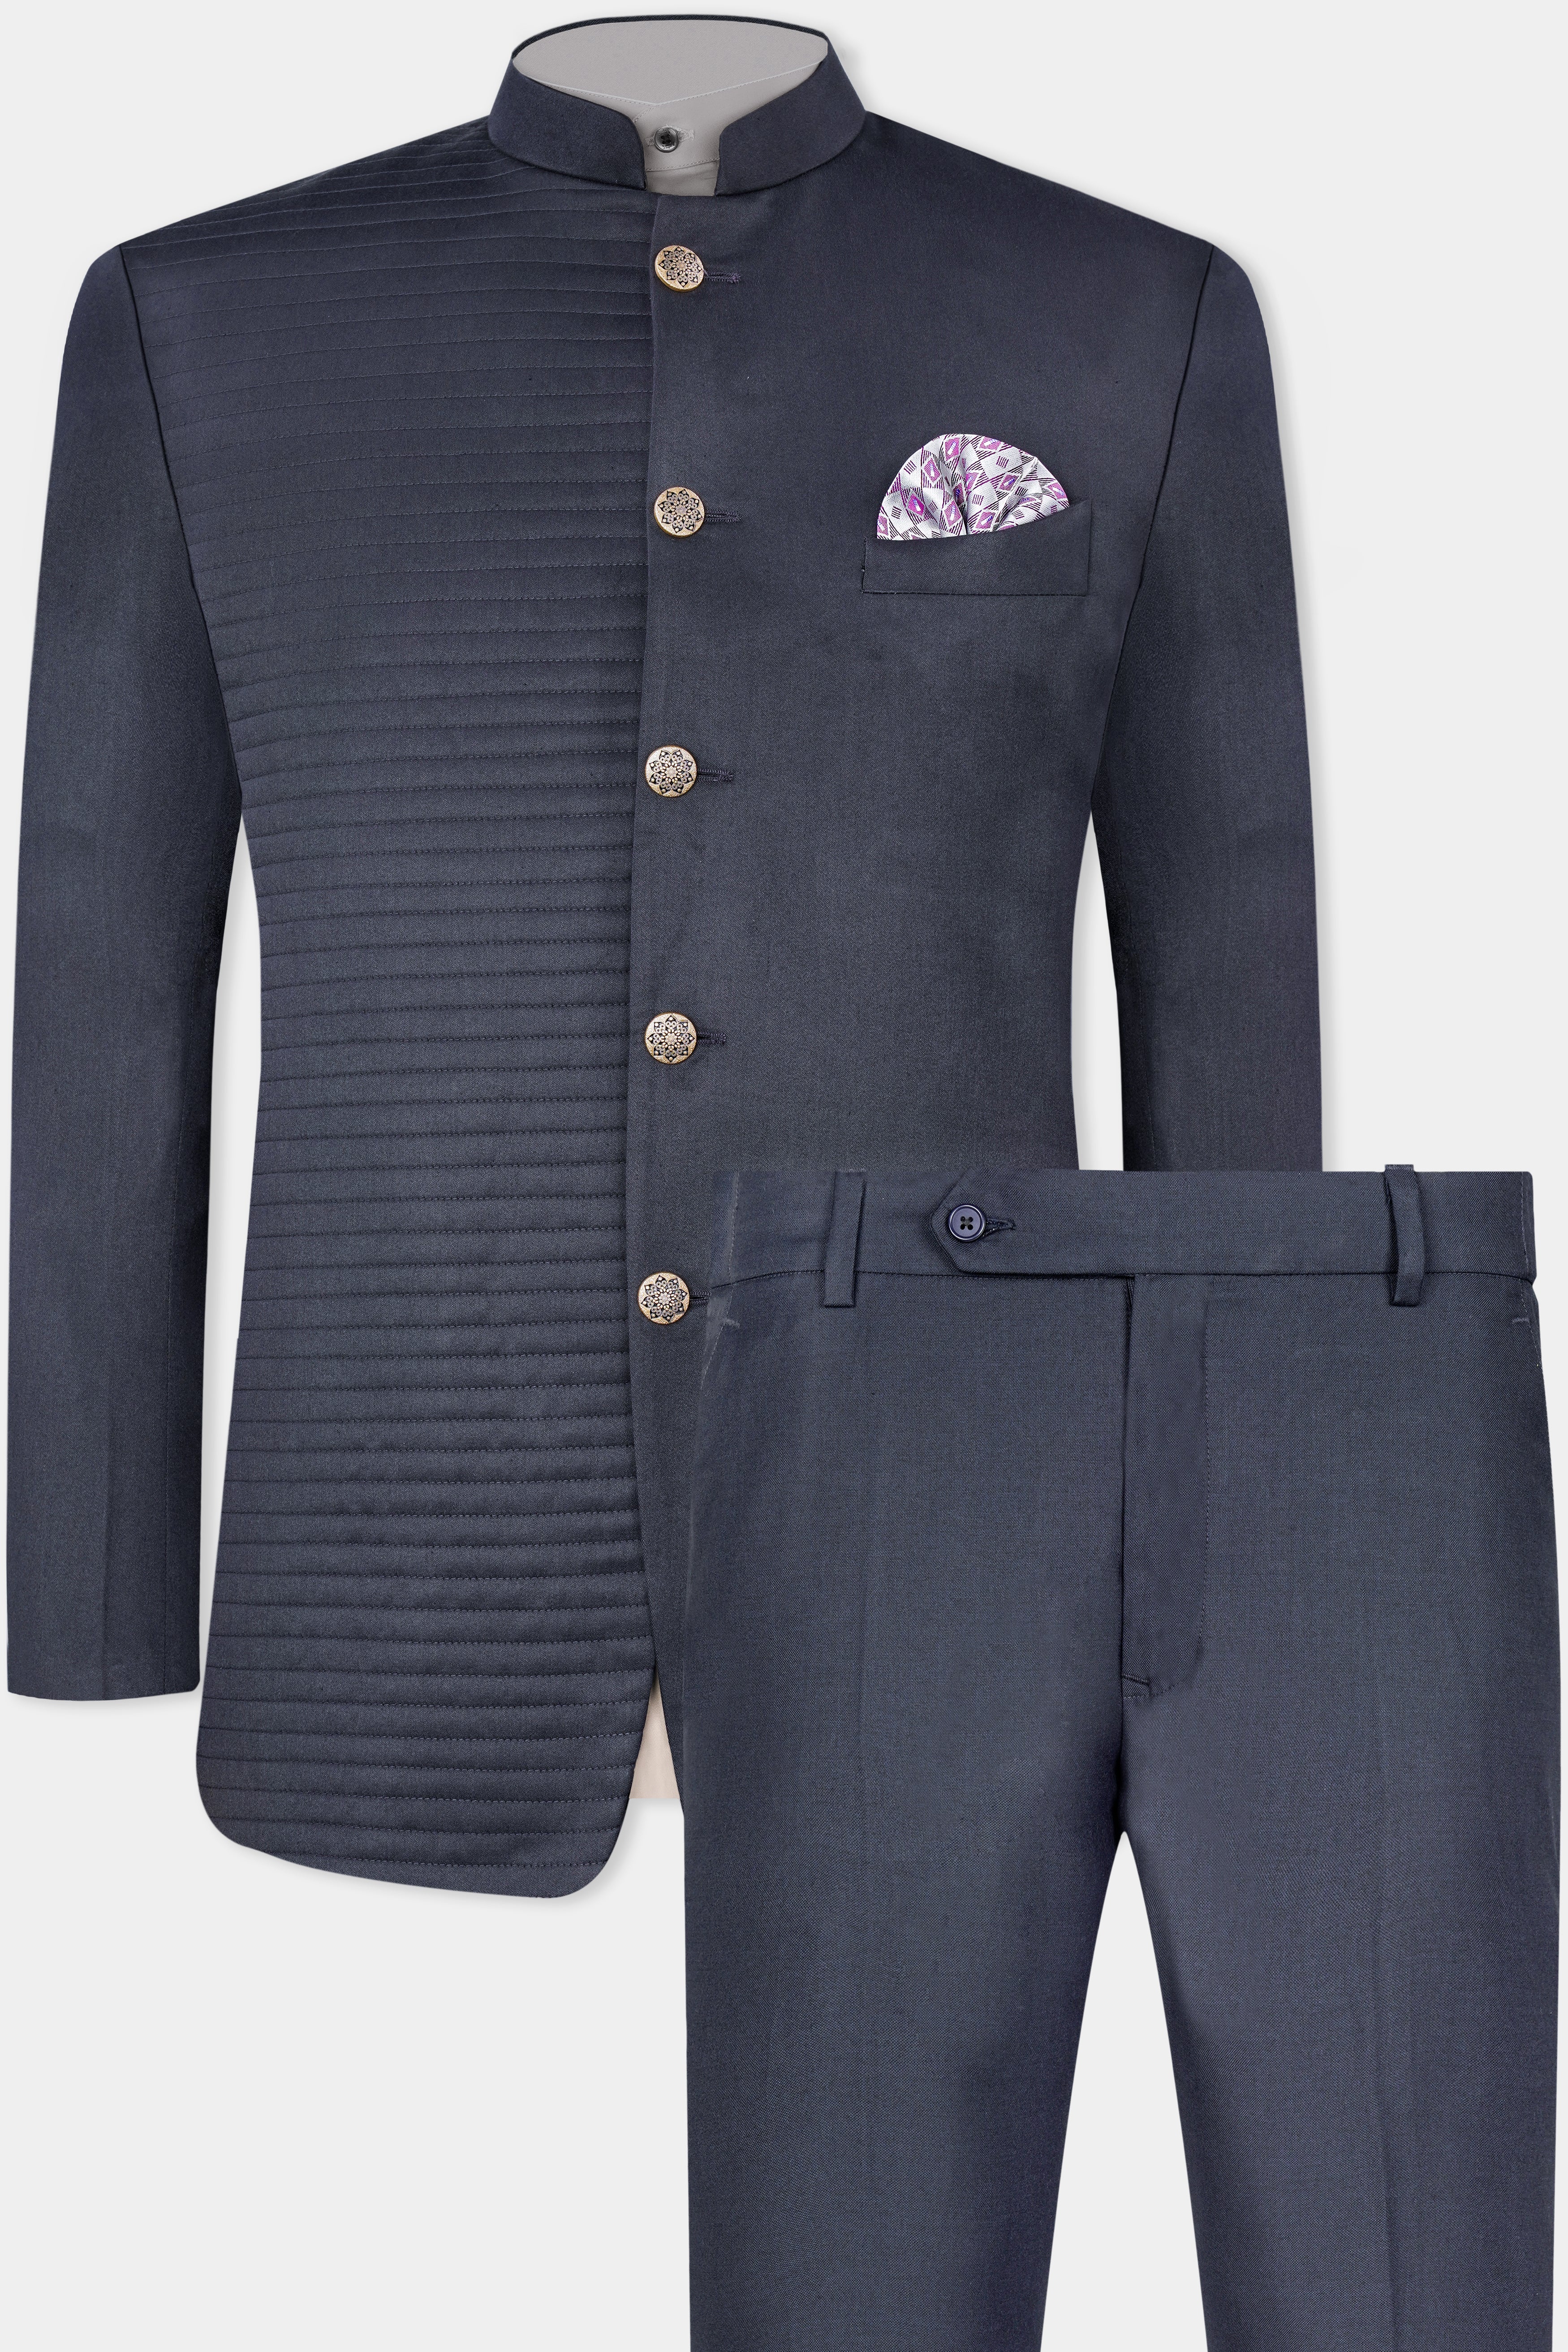 Marengo Gray with Horizontal Stitches Wool Rich Bandhgala Designer Suit ST2973-BG-D168-36, ST2973-BG-D168-38, ST2973-BG-D168-40, ST2973-BG-D168-42, ST2973-BG-D168-44, ST2973-BG-D168-46, ST2973-BG-D168-48, ST2973-BG-D168-50, ST2973-BG-D168-52, ST2973-BG-D168-54, ST2973-BG-D168-56, ST2973-BG-D168-58, ST2973-BG-D168-60